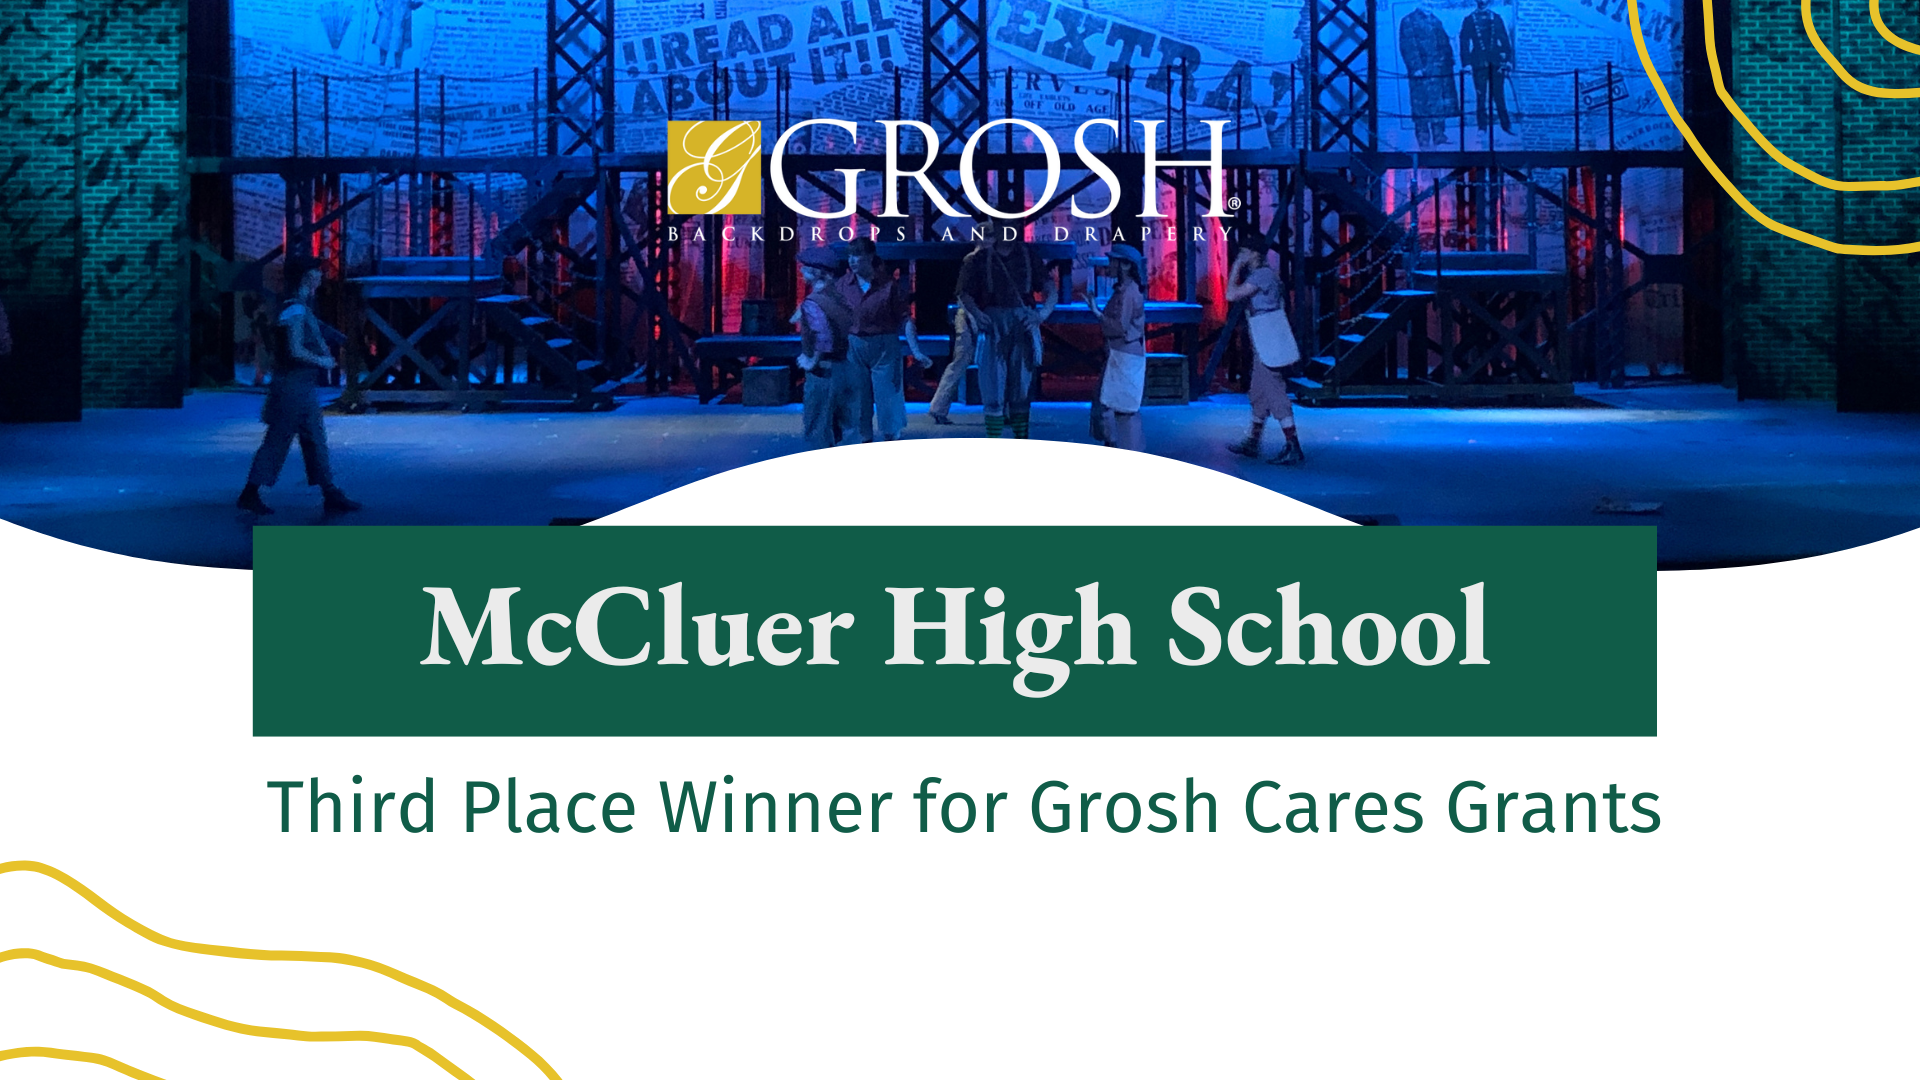 McCluer High School – Third Place Winner for Grosh Cares Grants